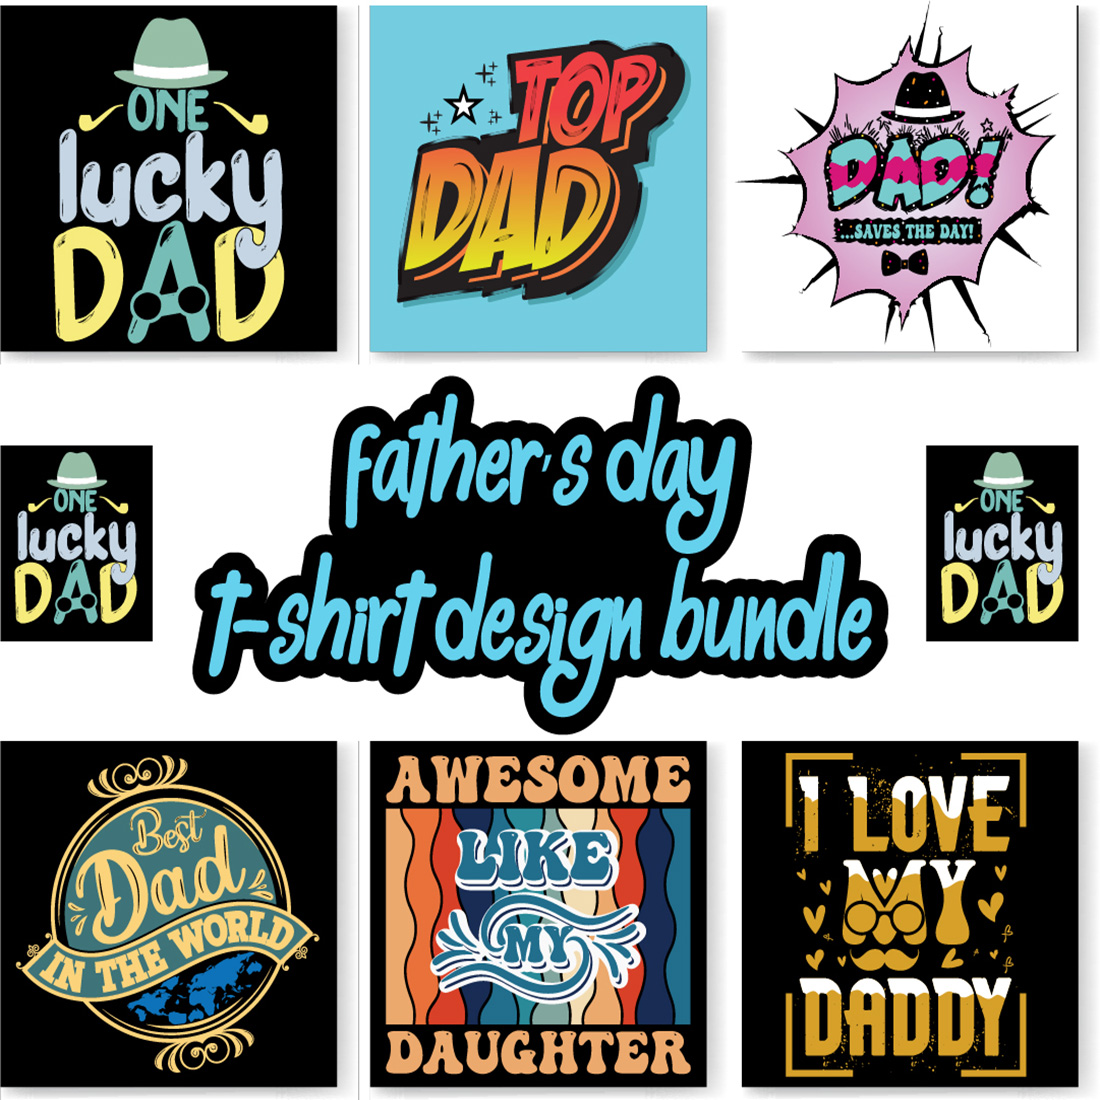 Father's day t-shirt design bundle, Dad t-shirt design, papa t shirt preview image.